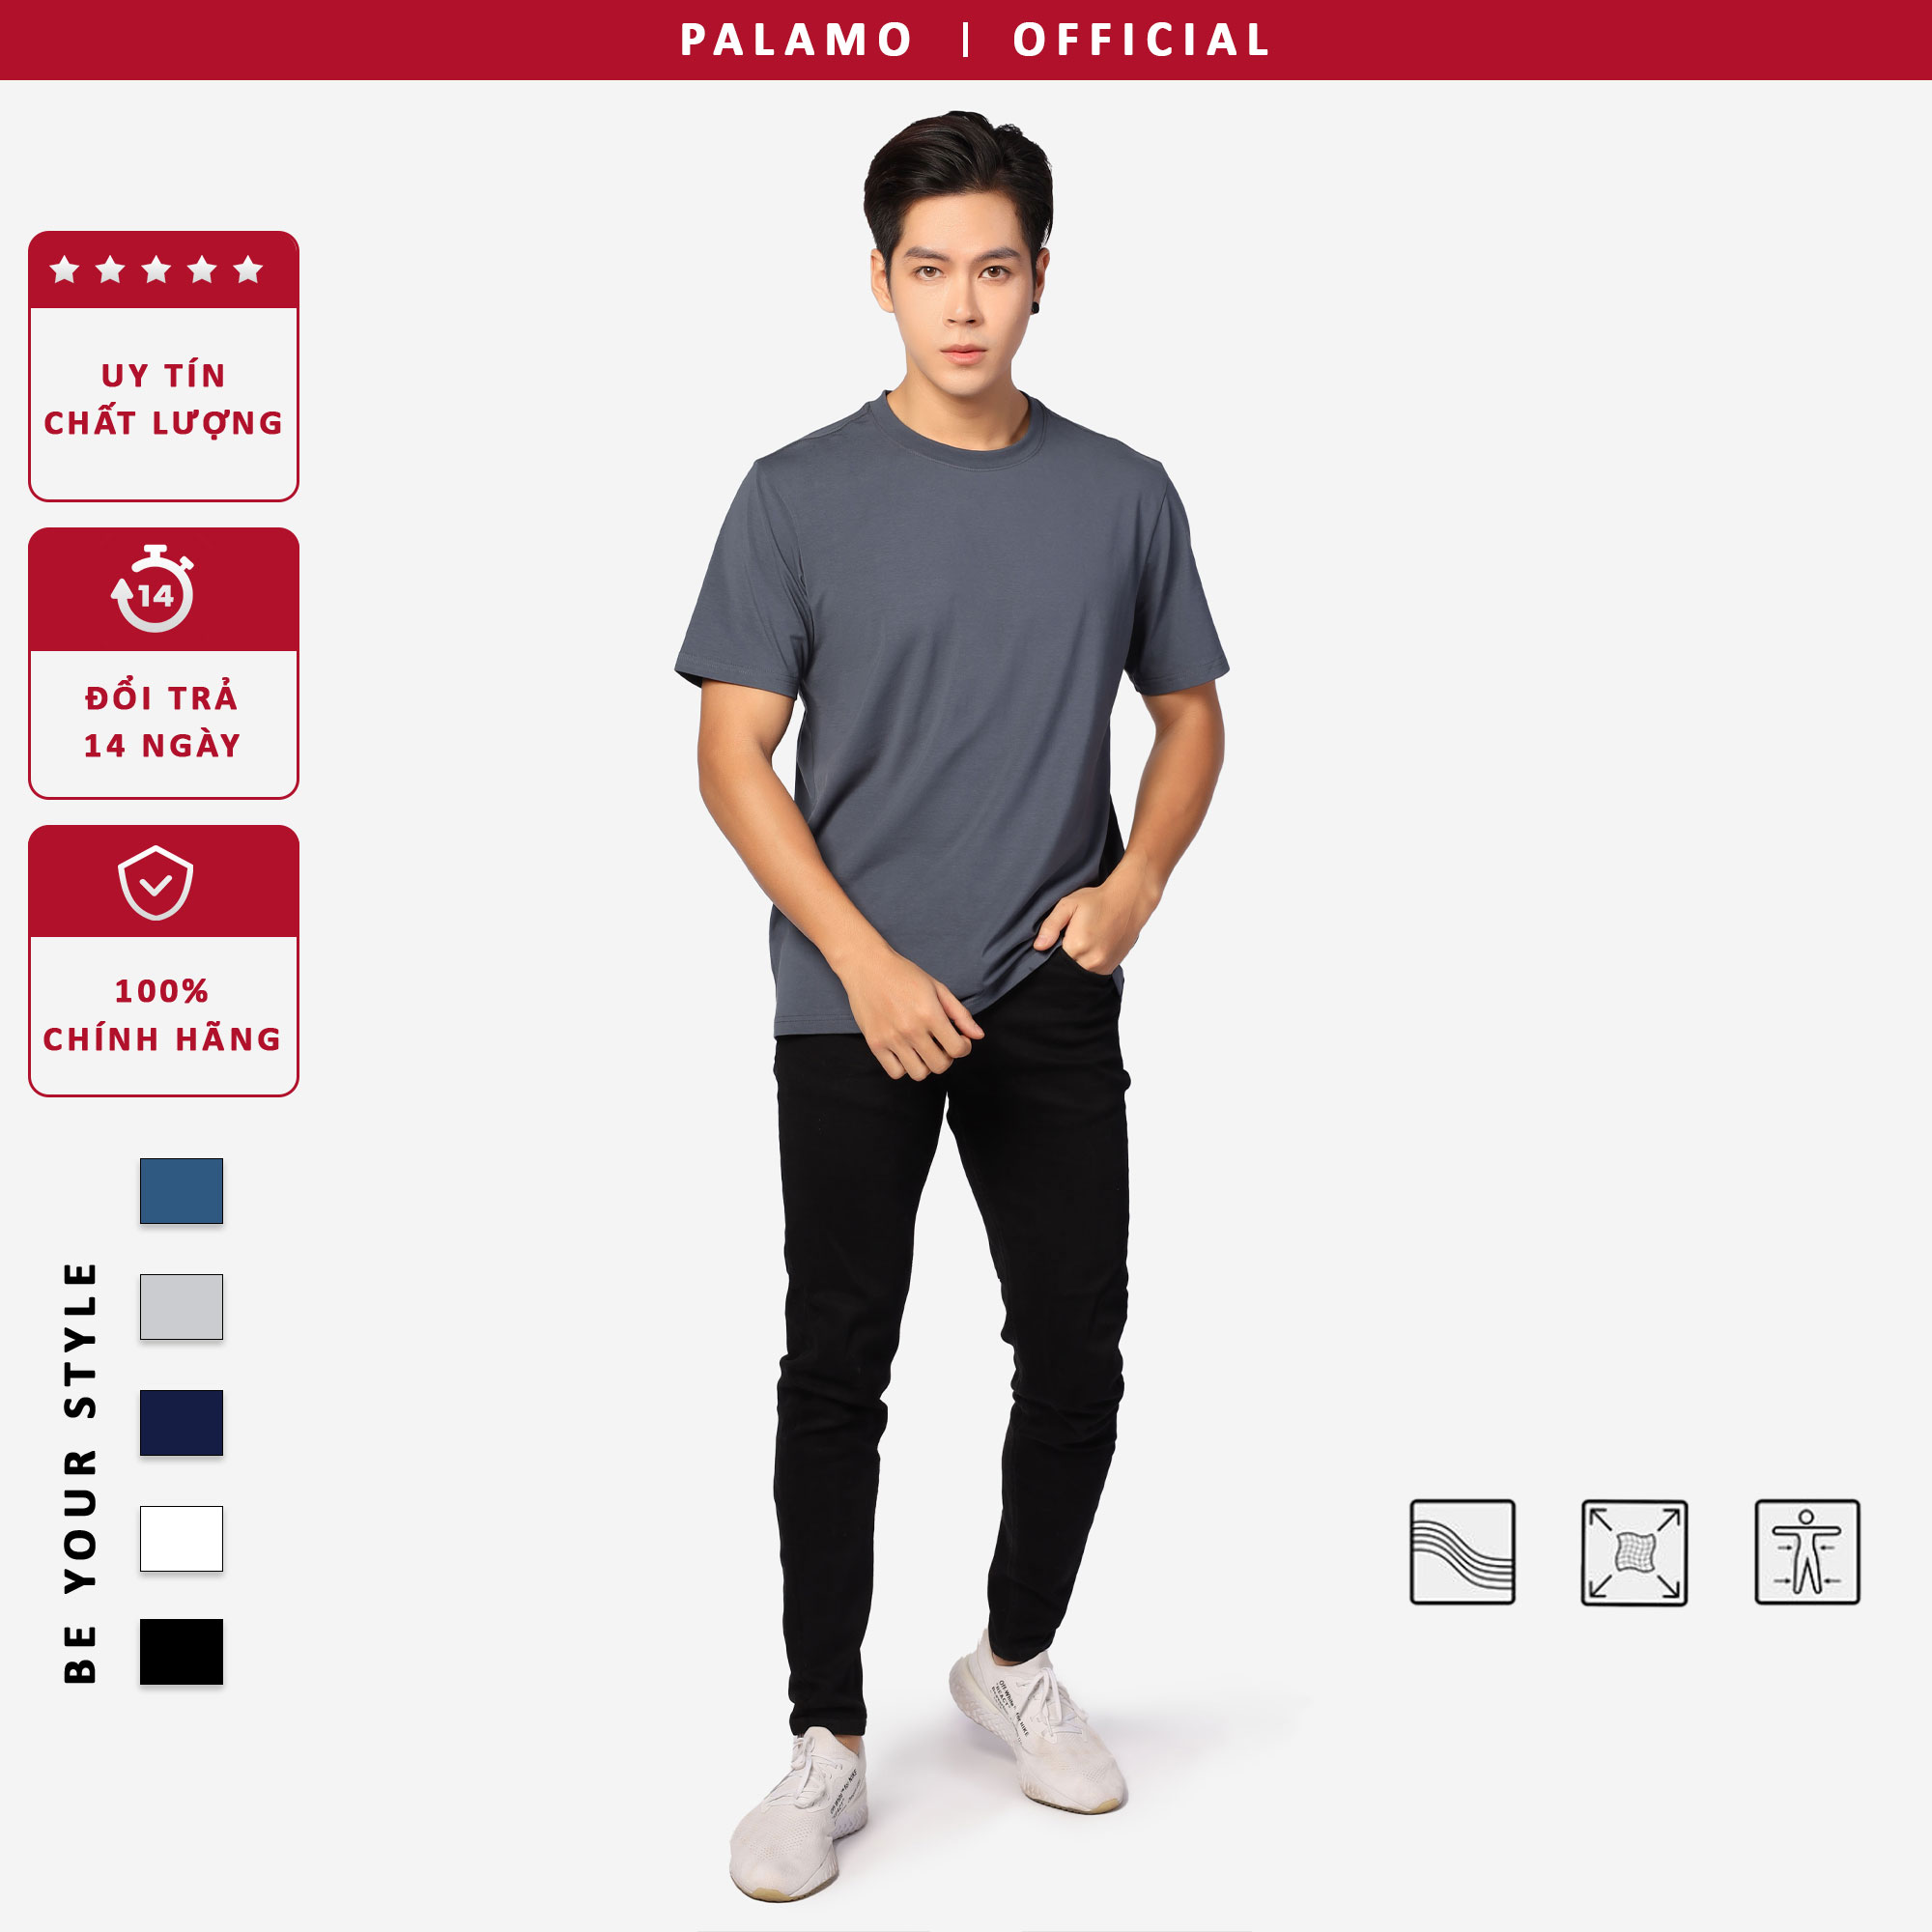  Áo thun nam cotton compact Palamo classic regular fit / màu xanh lam